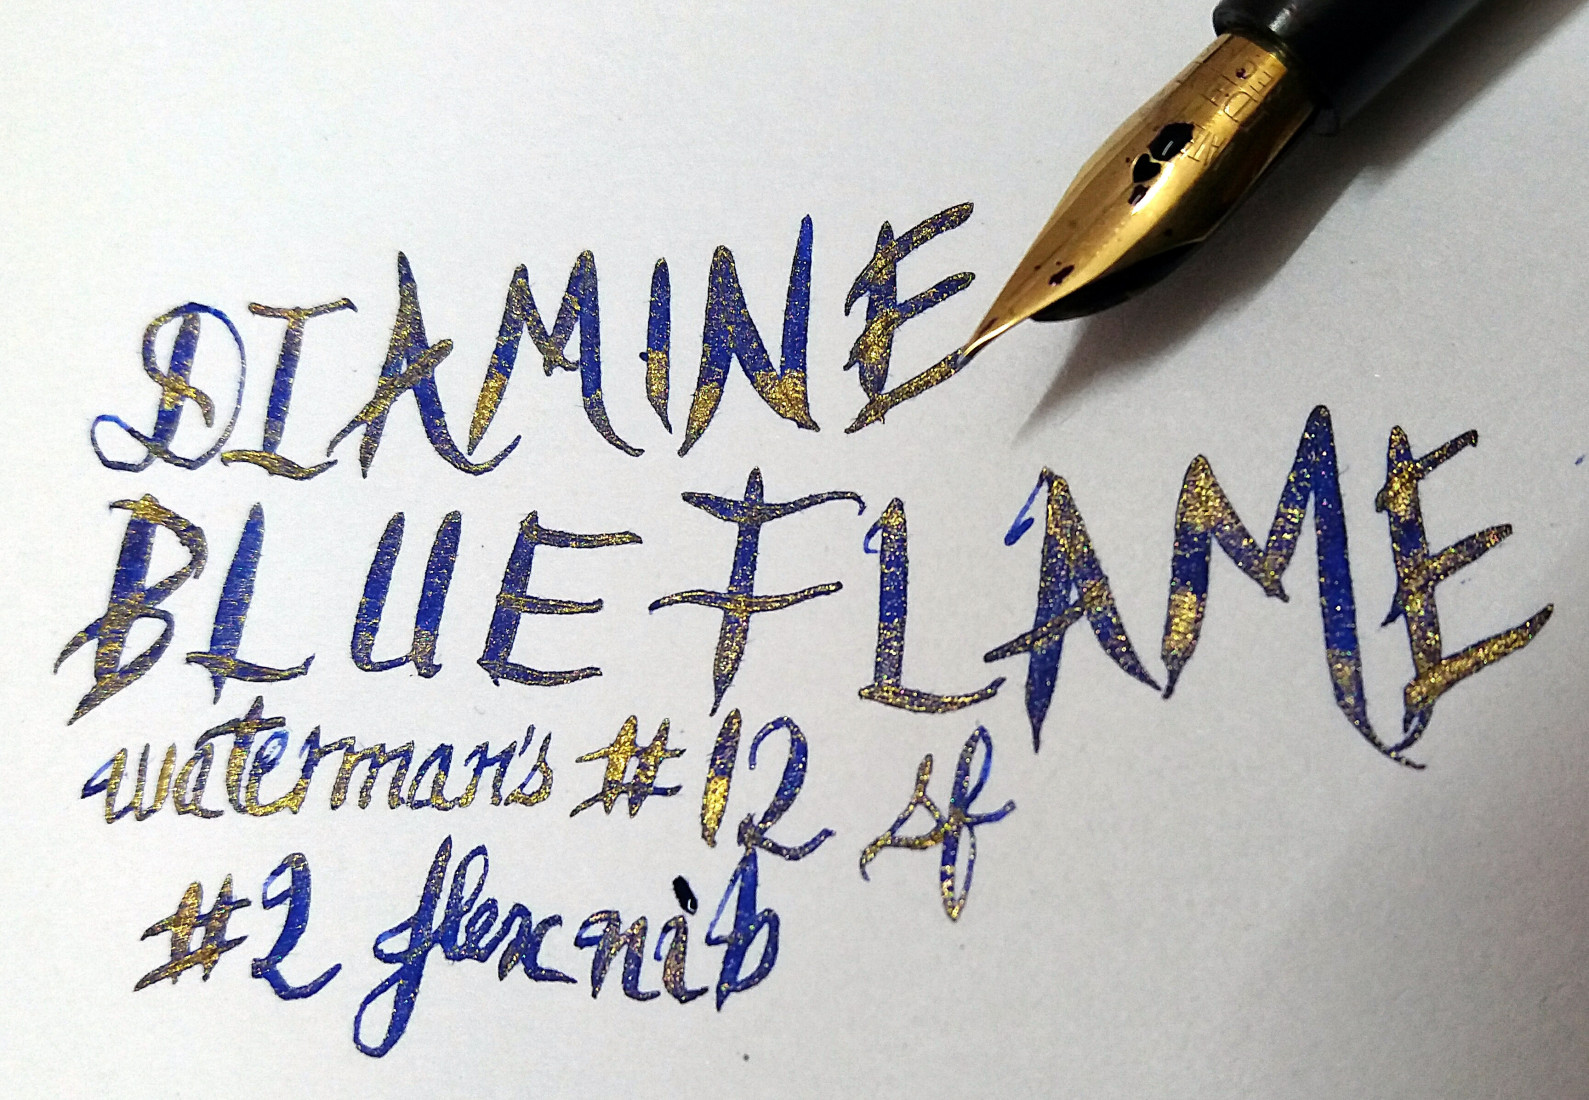 Diamine 50ml Blue Flame Fountain pen shimmer ink